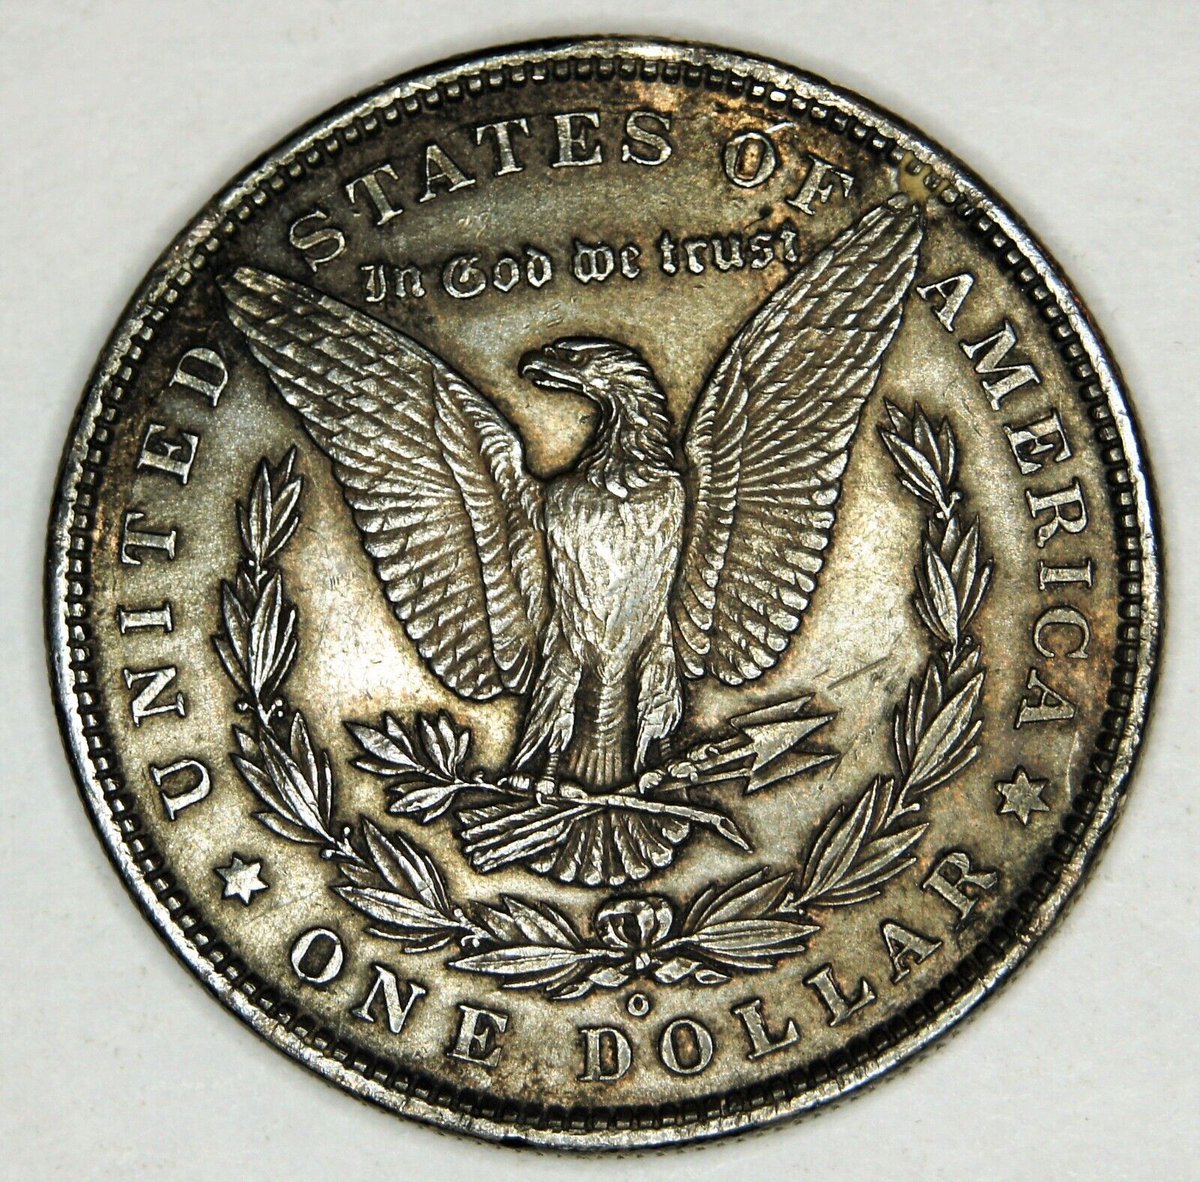 1880 O Morgan Dollar - Antiqued & Rainbow Toned.
ebay.com/itm/4043571045…

#morgandollar #silver #rarecoins #uscoins #numismatics #americanhistory